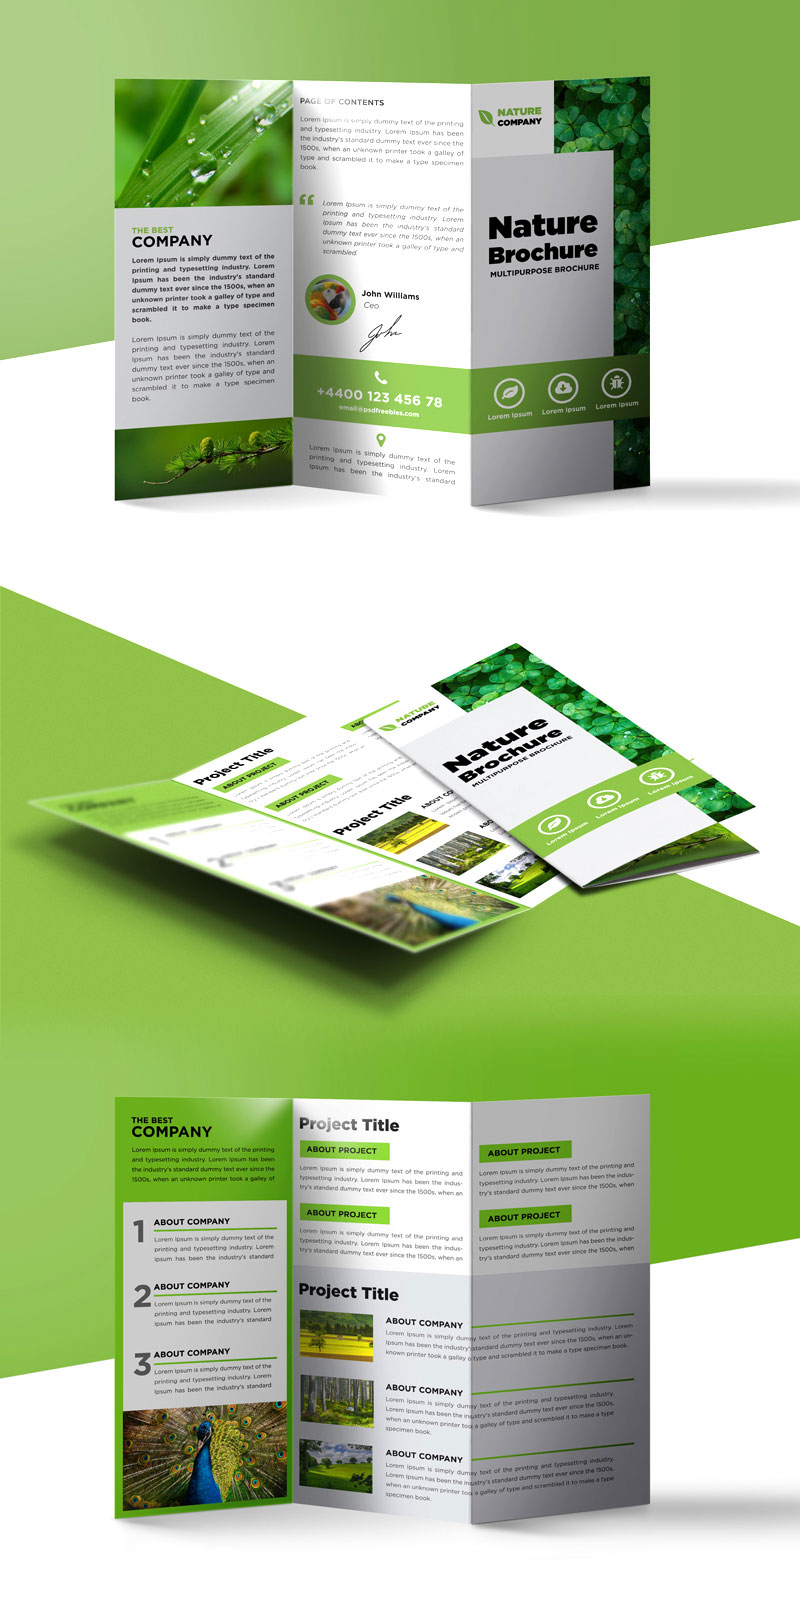 Nature Tri Fold Brochure Template Free Psd | Psdfreebies For 3 Fold Brochure Template Psd Free Download